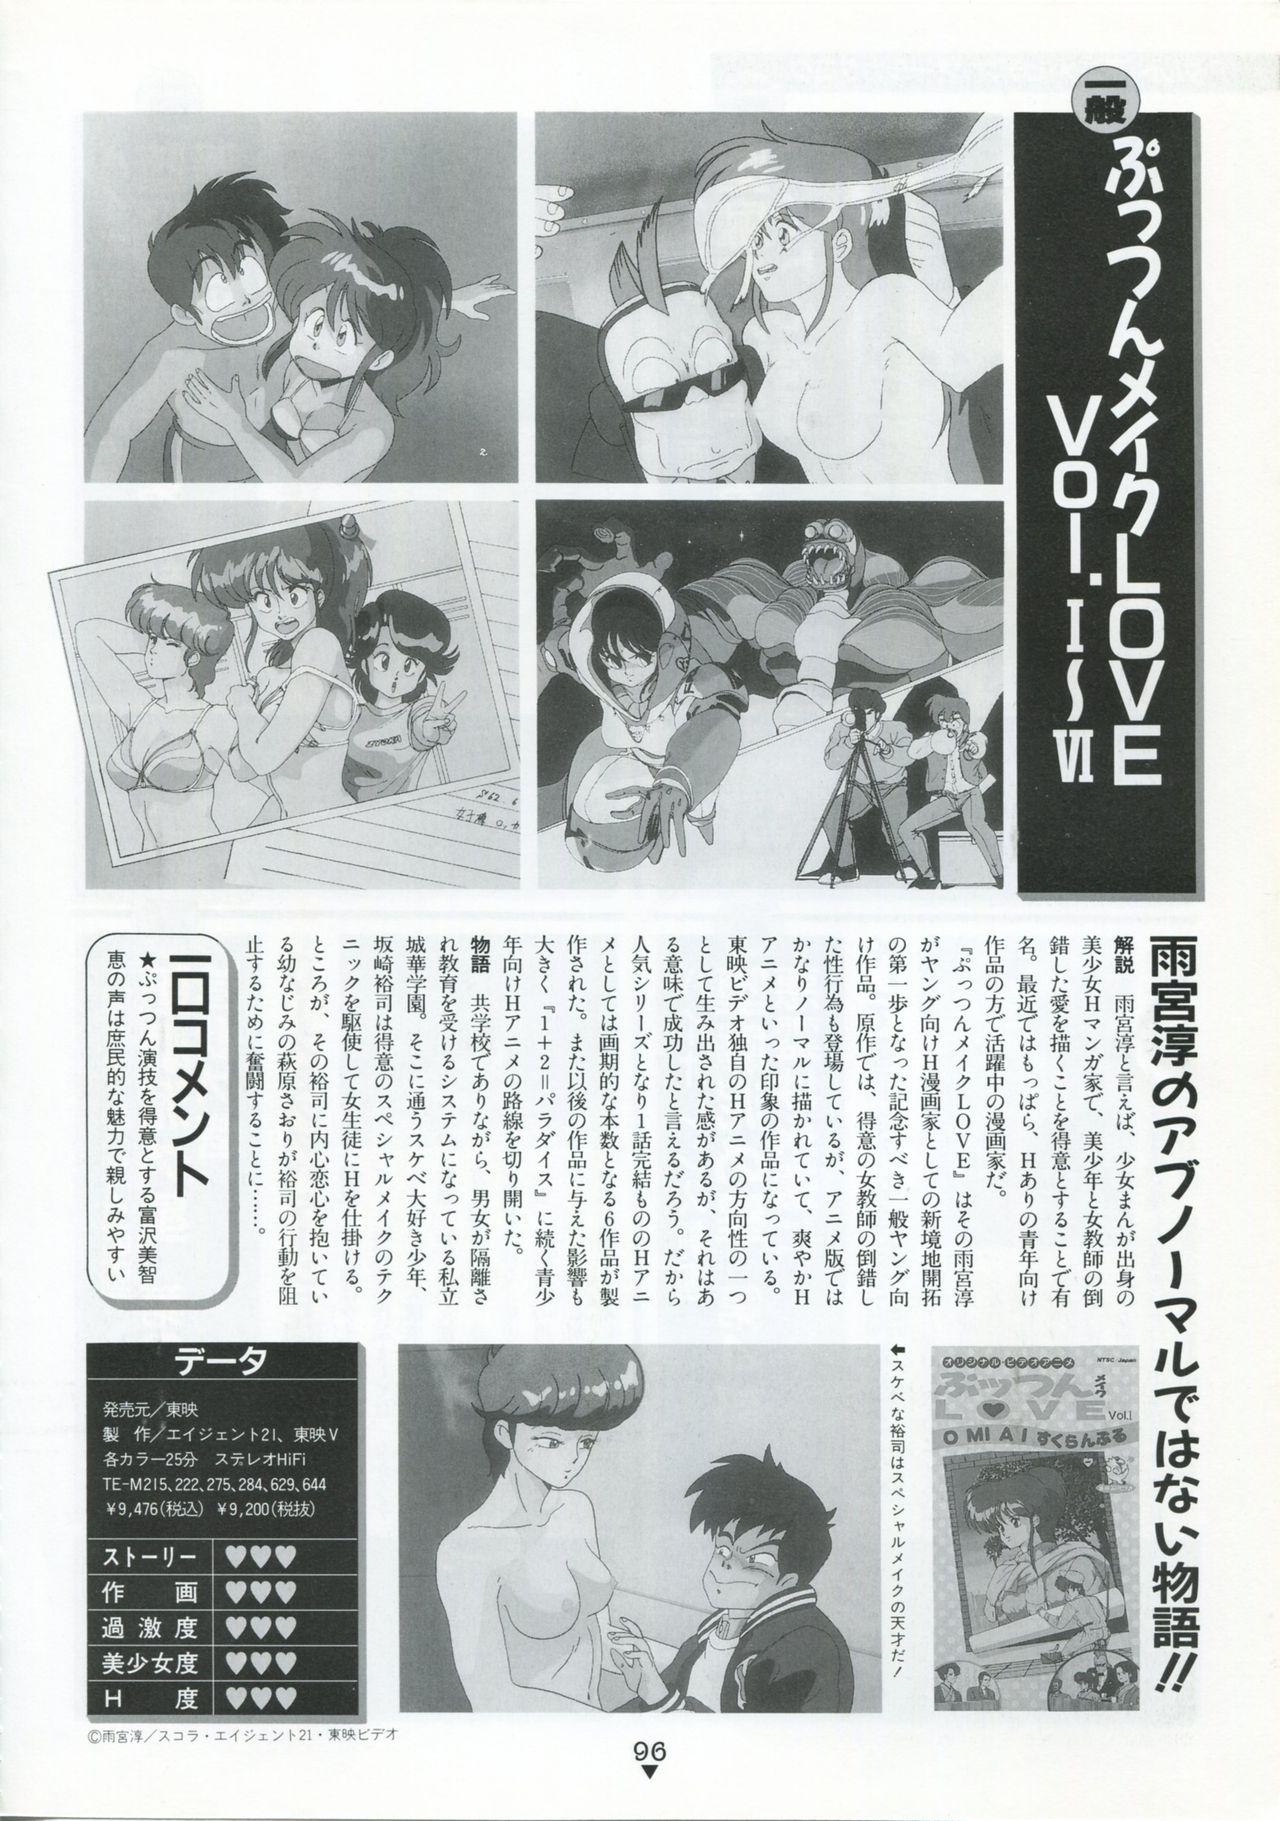 Bishoujo Anime Daizenshuu - Adult Animation Video Catalog 1991 91